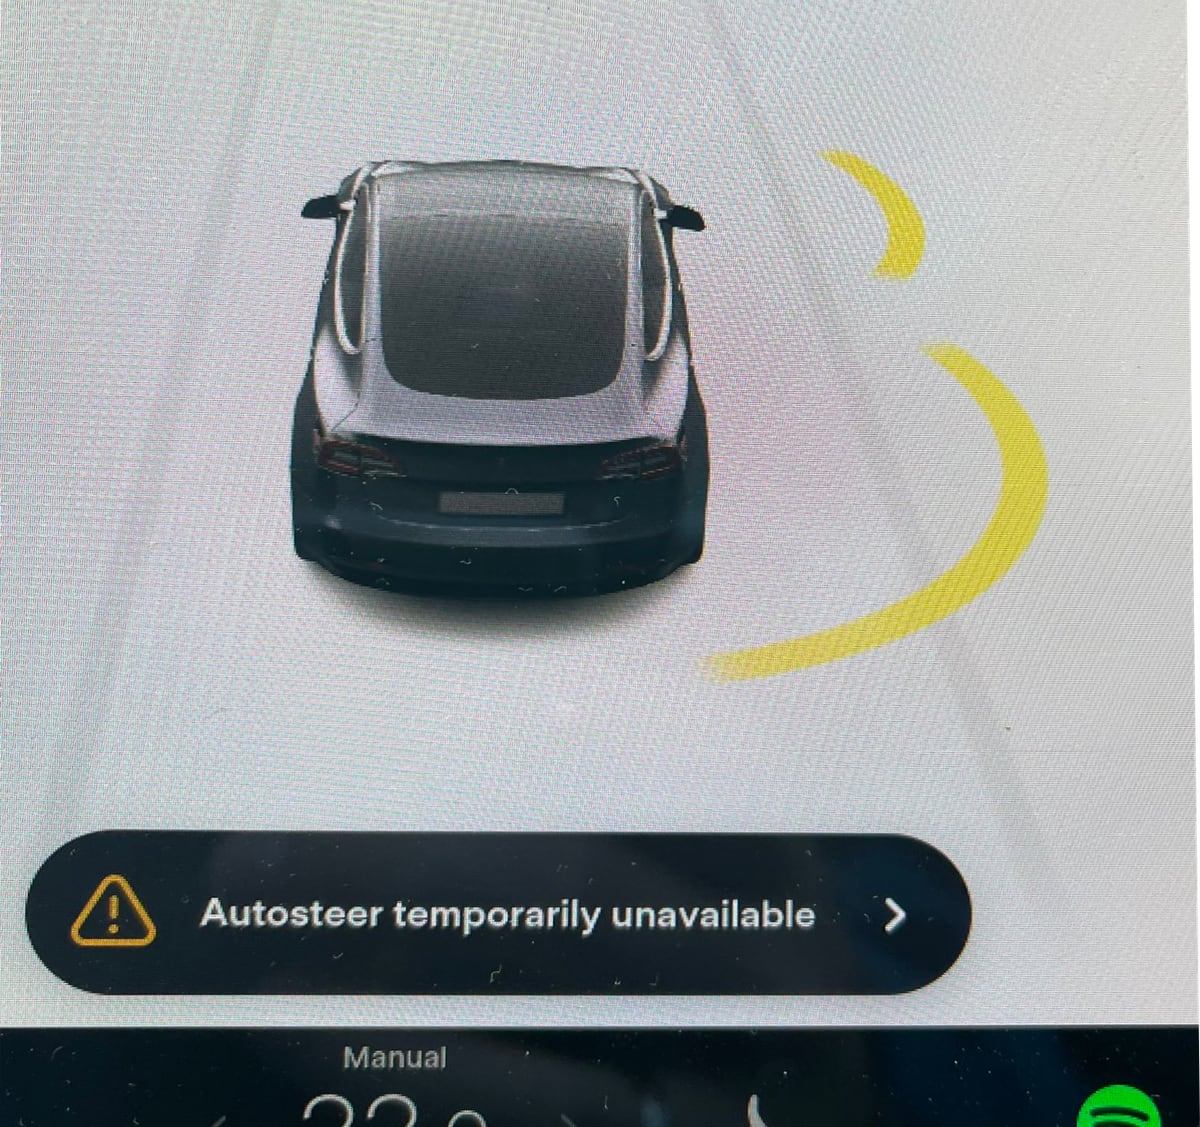 Tesla Vehicle Alerts feature in update 2022.28.1